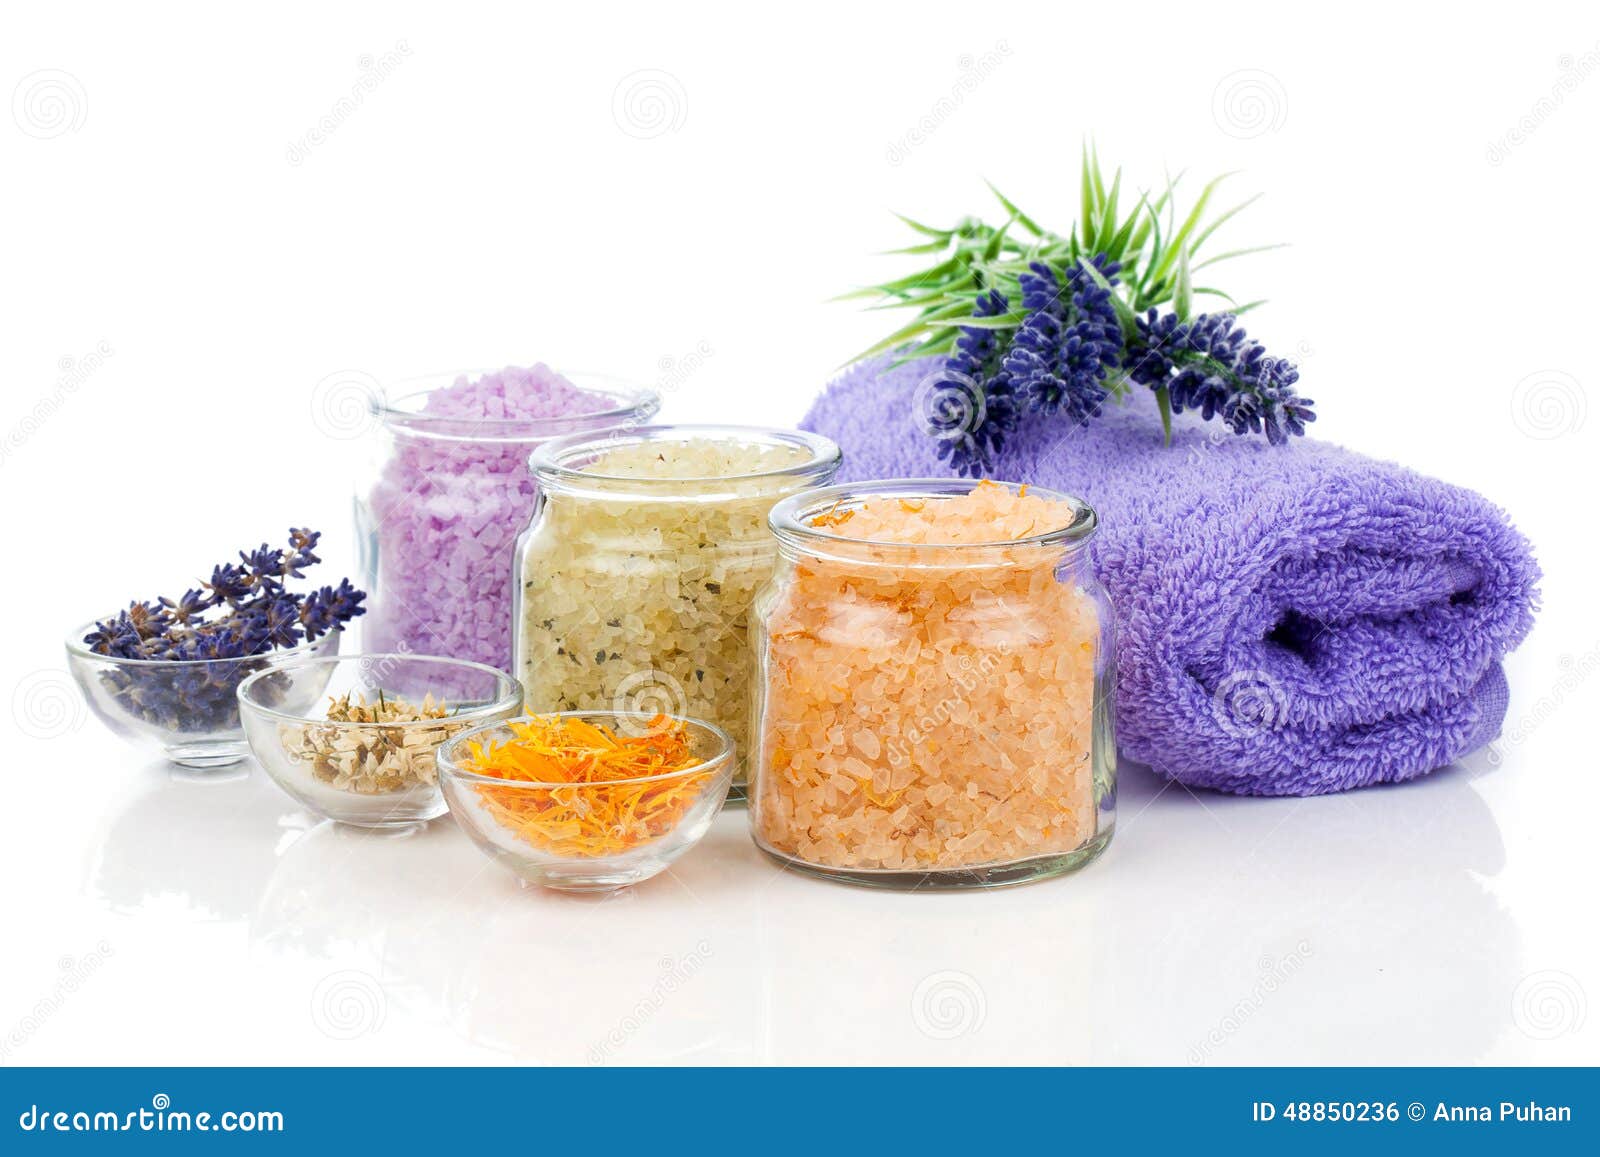 various kinds of bath salt with flowers